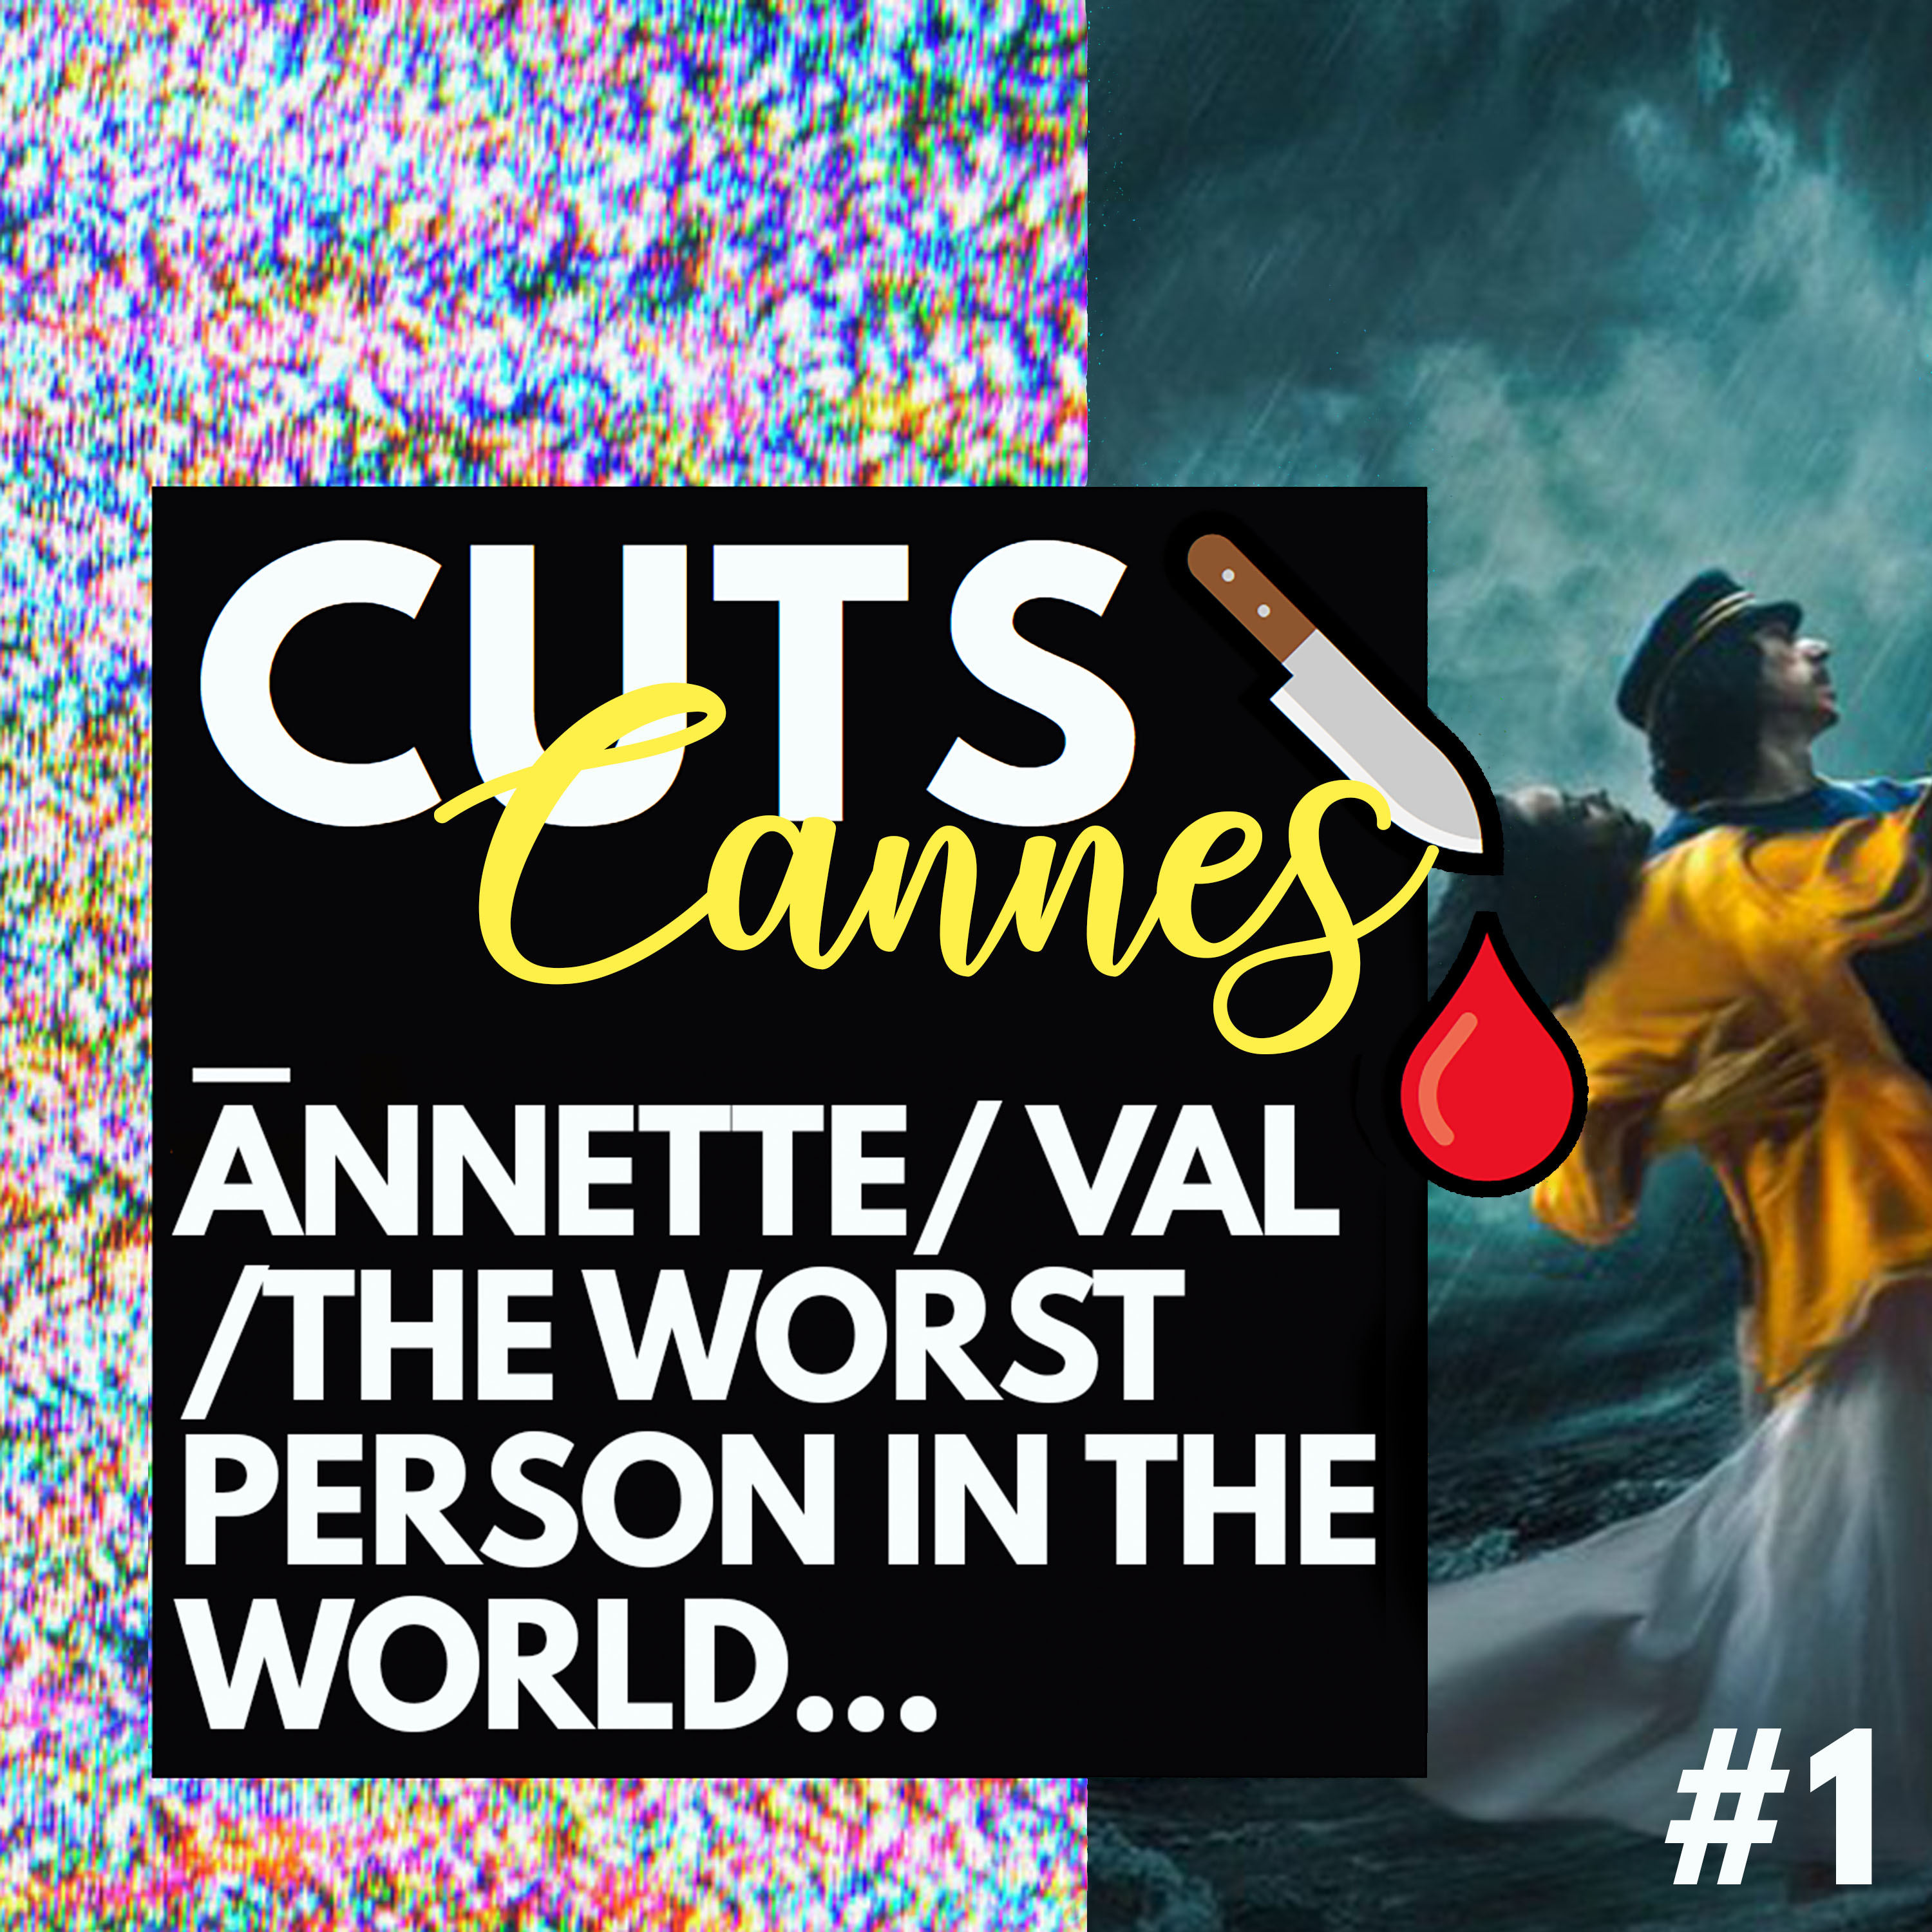 Cannes #1 - Annette, Velvet Underground, Val, The Worst Person...